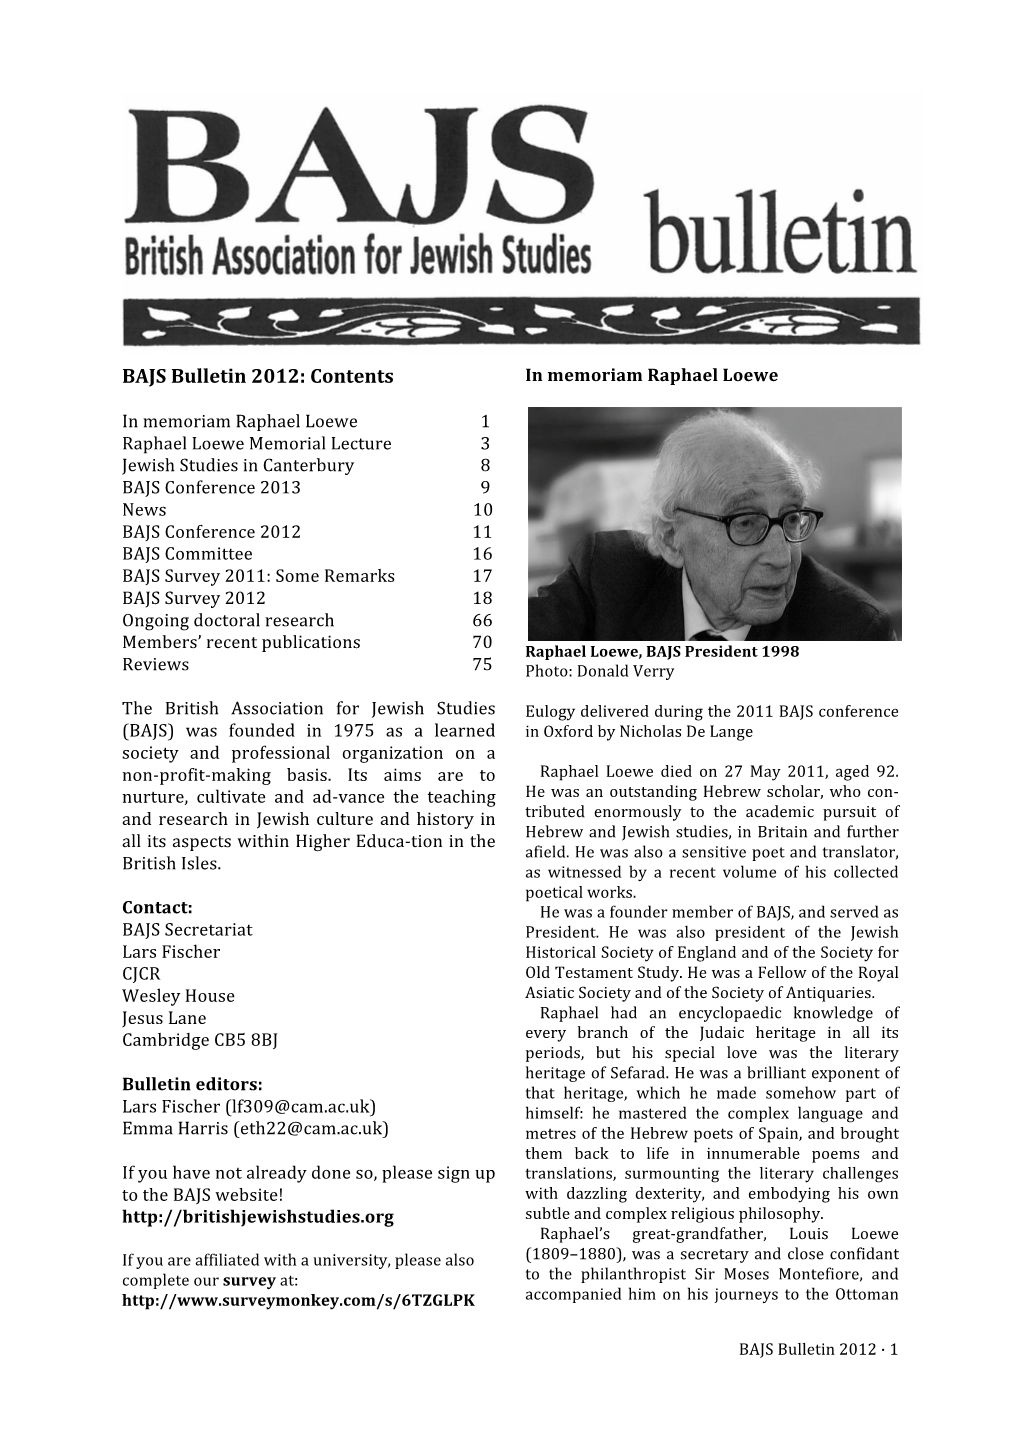 BAJS Bulletin 2012: Contents in Memoriam Raphael Loewe